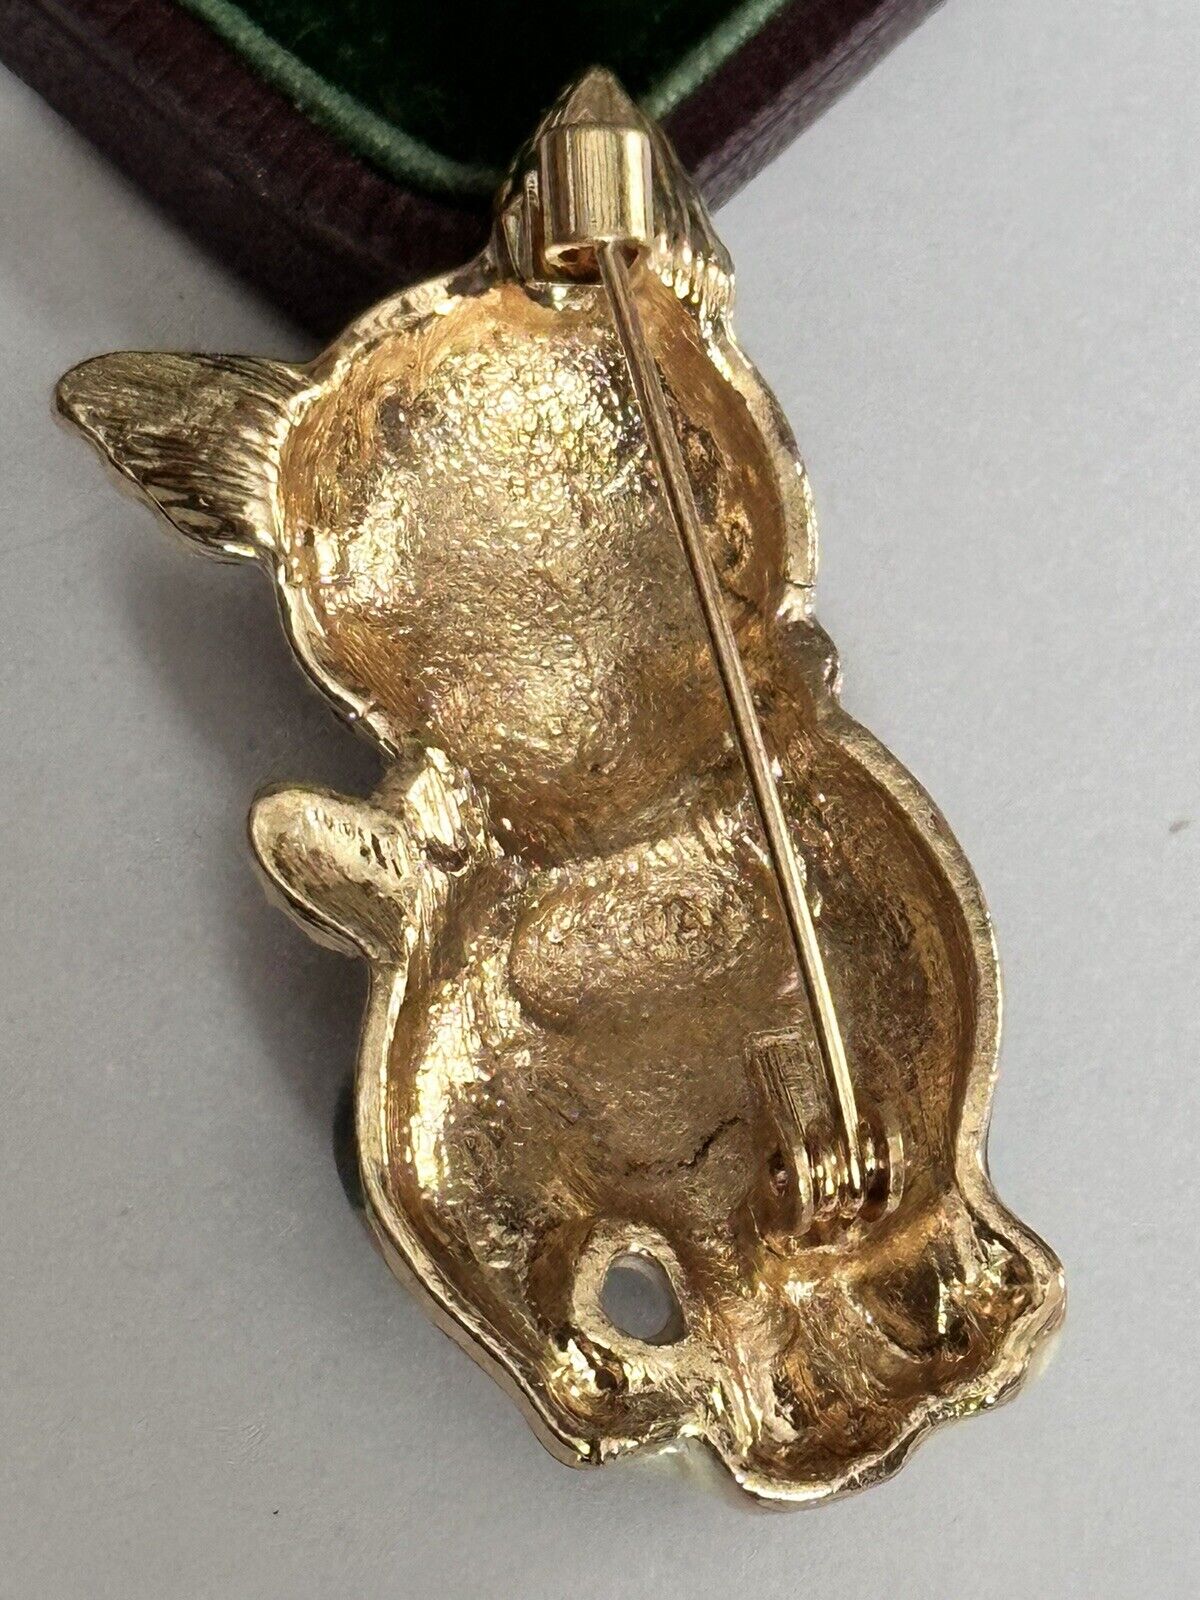 Vintage Enamel Diamanté Cat Brooch